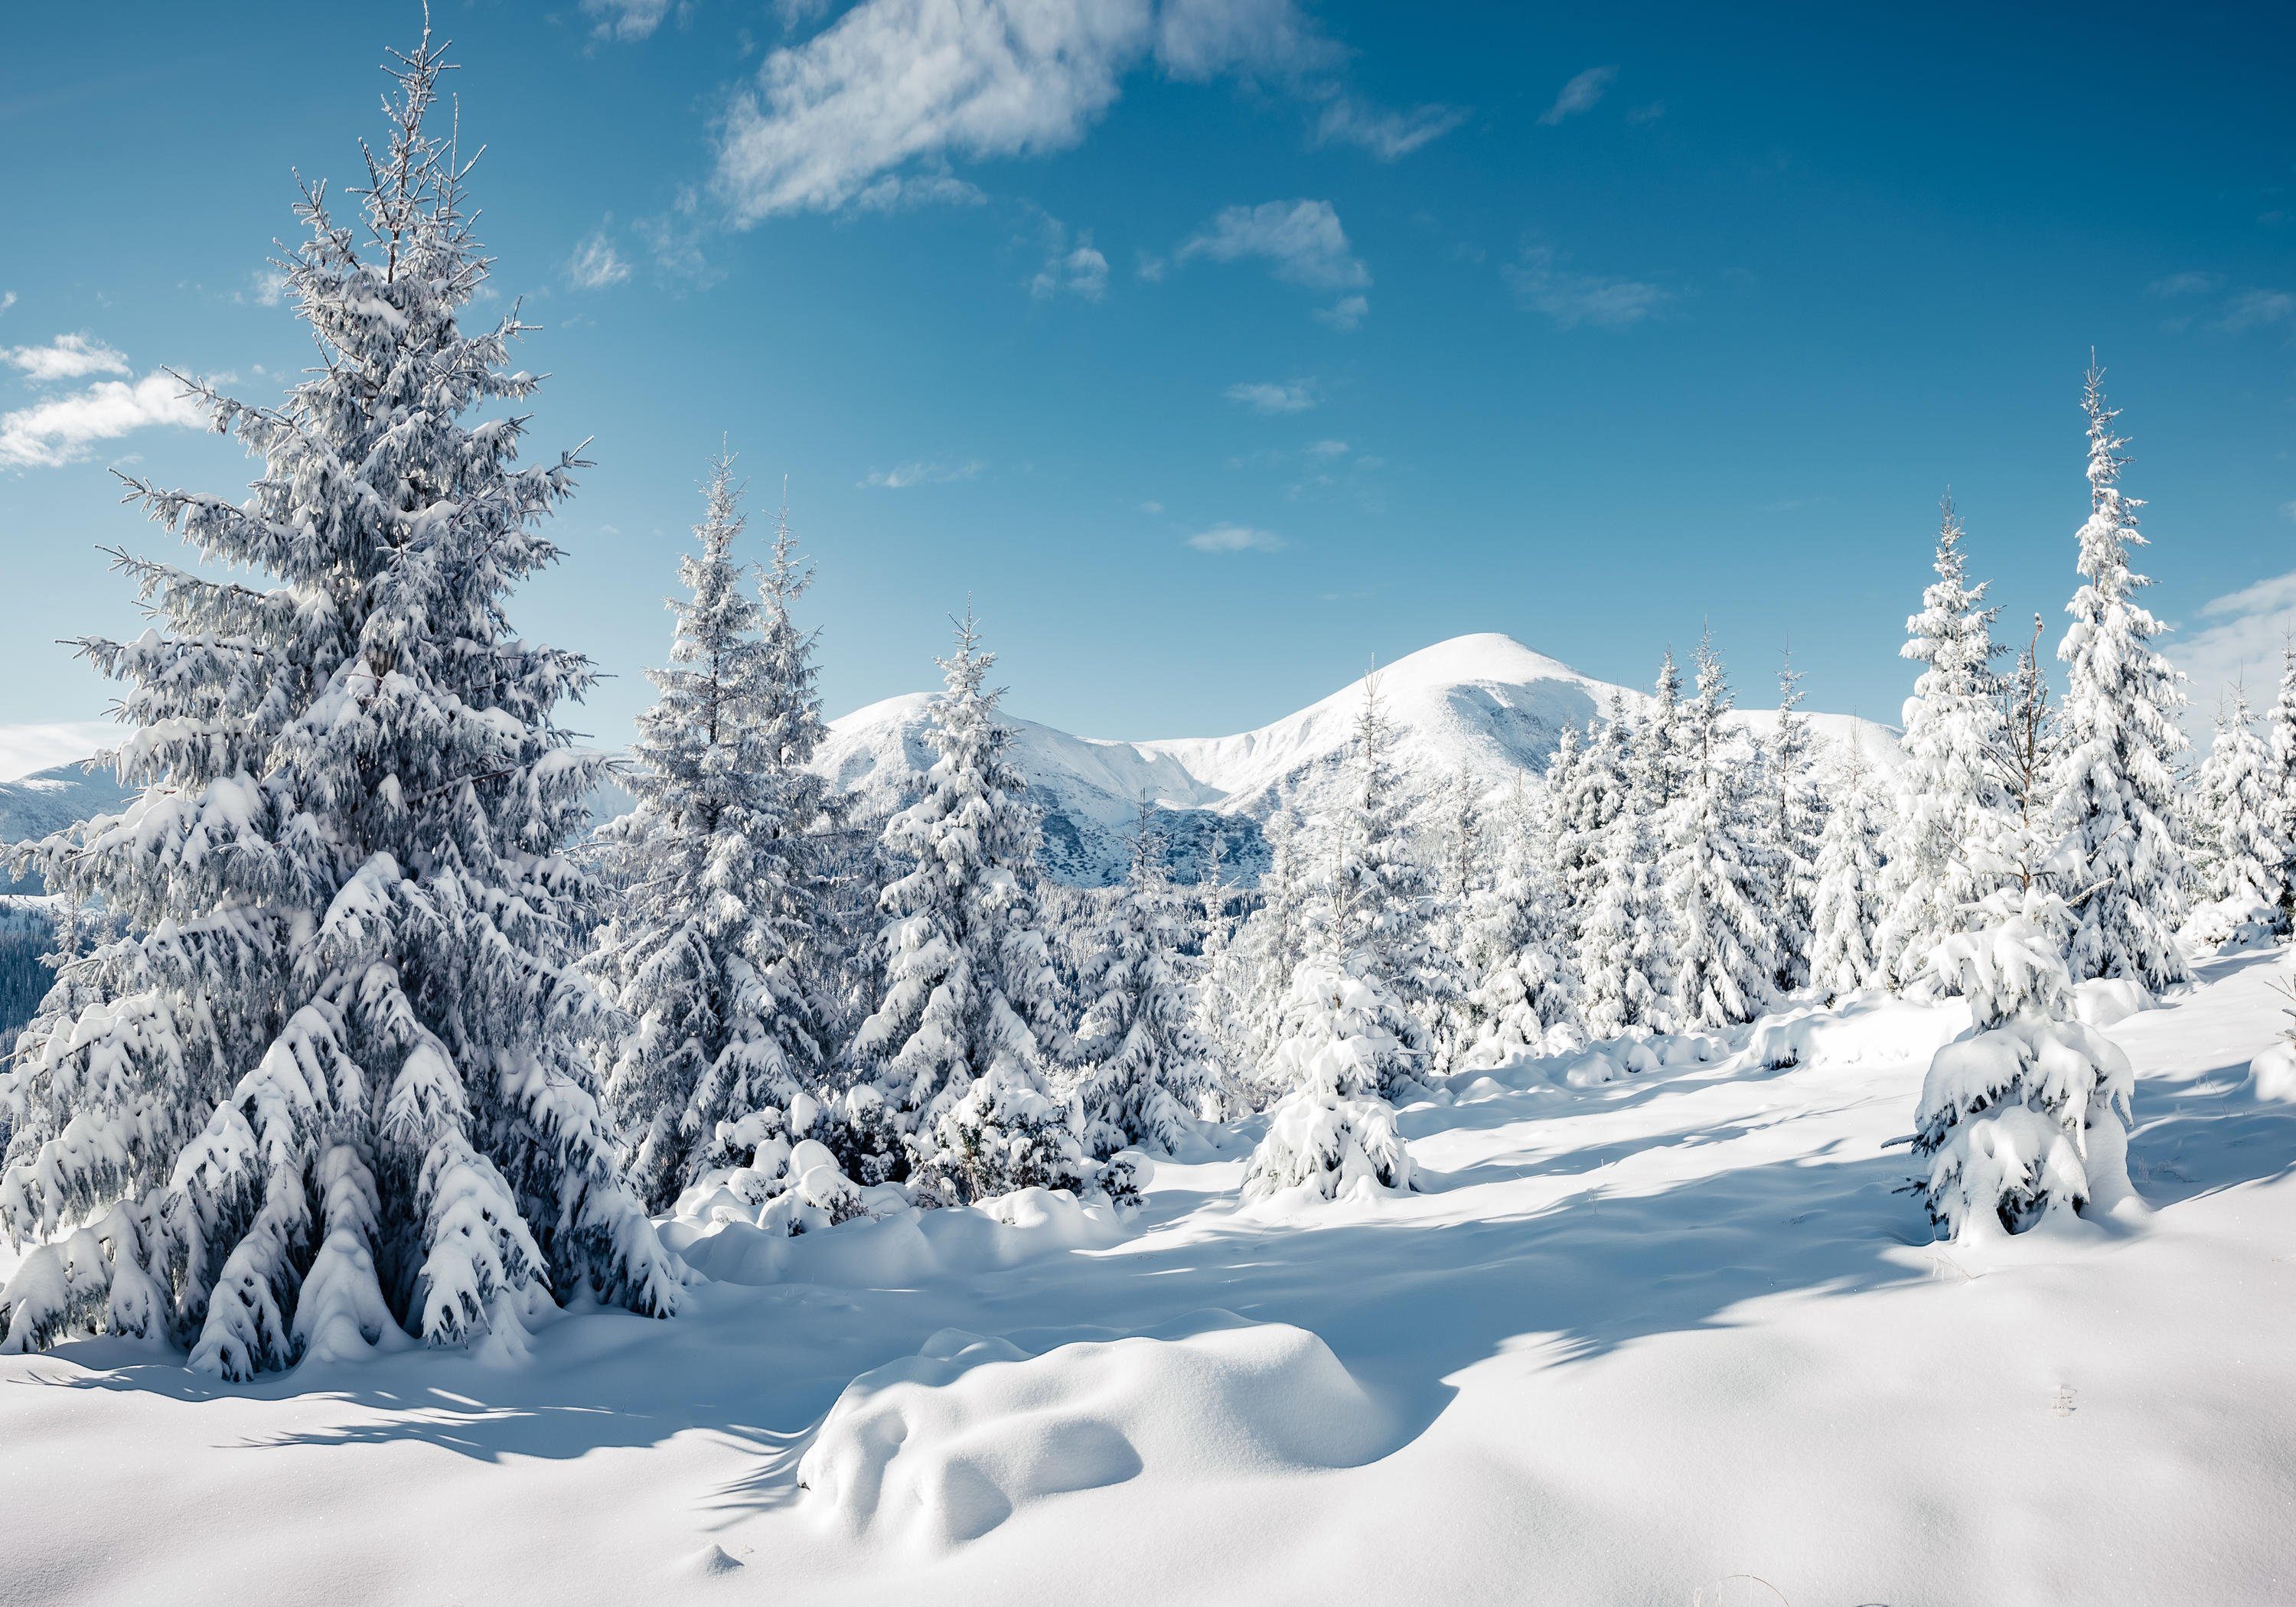 Fototapete mit Schnee, glatt, Motivtapete, Berge wandmotiv24 Wandtapete, matt, Vliestapete